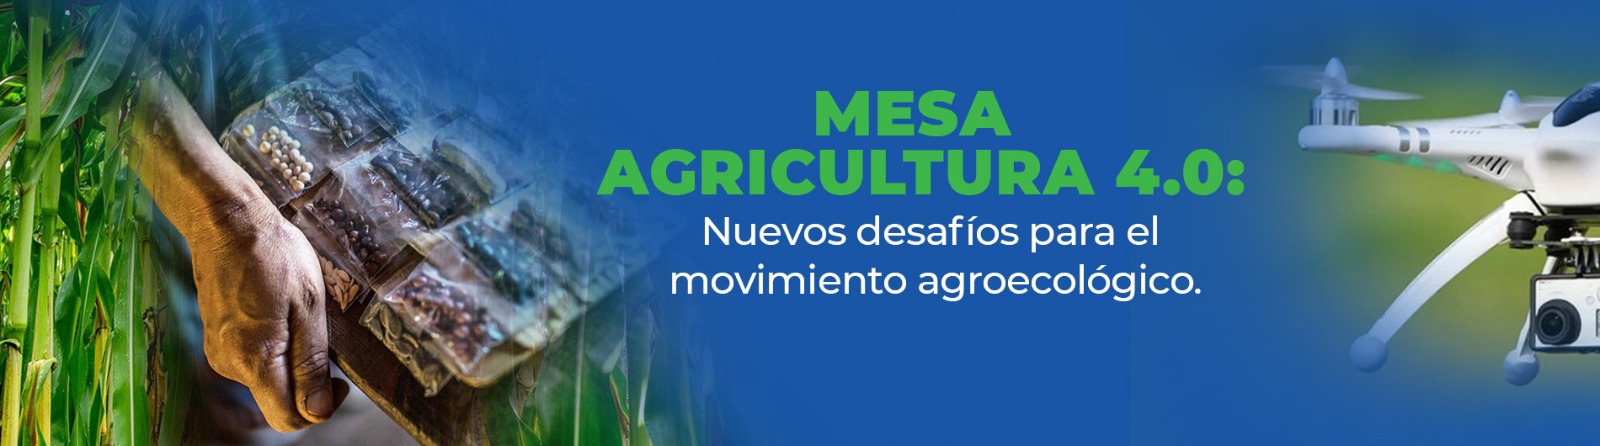 Afiche Agricultura 4.0